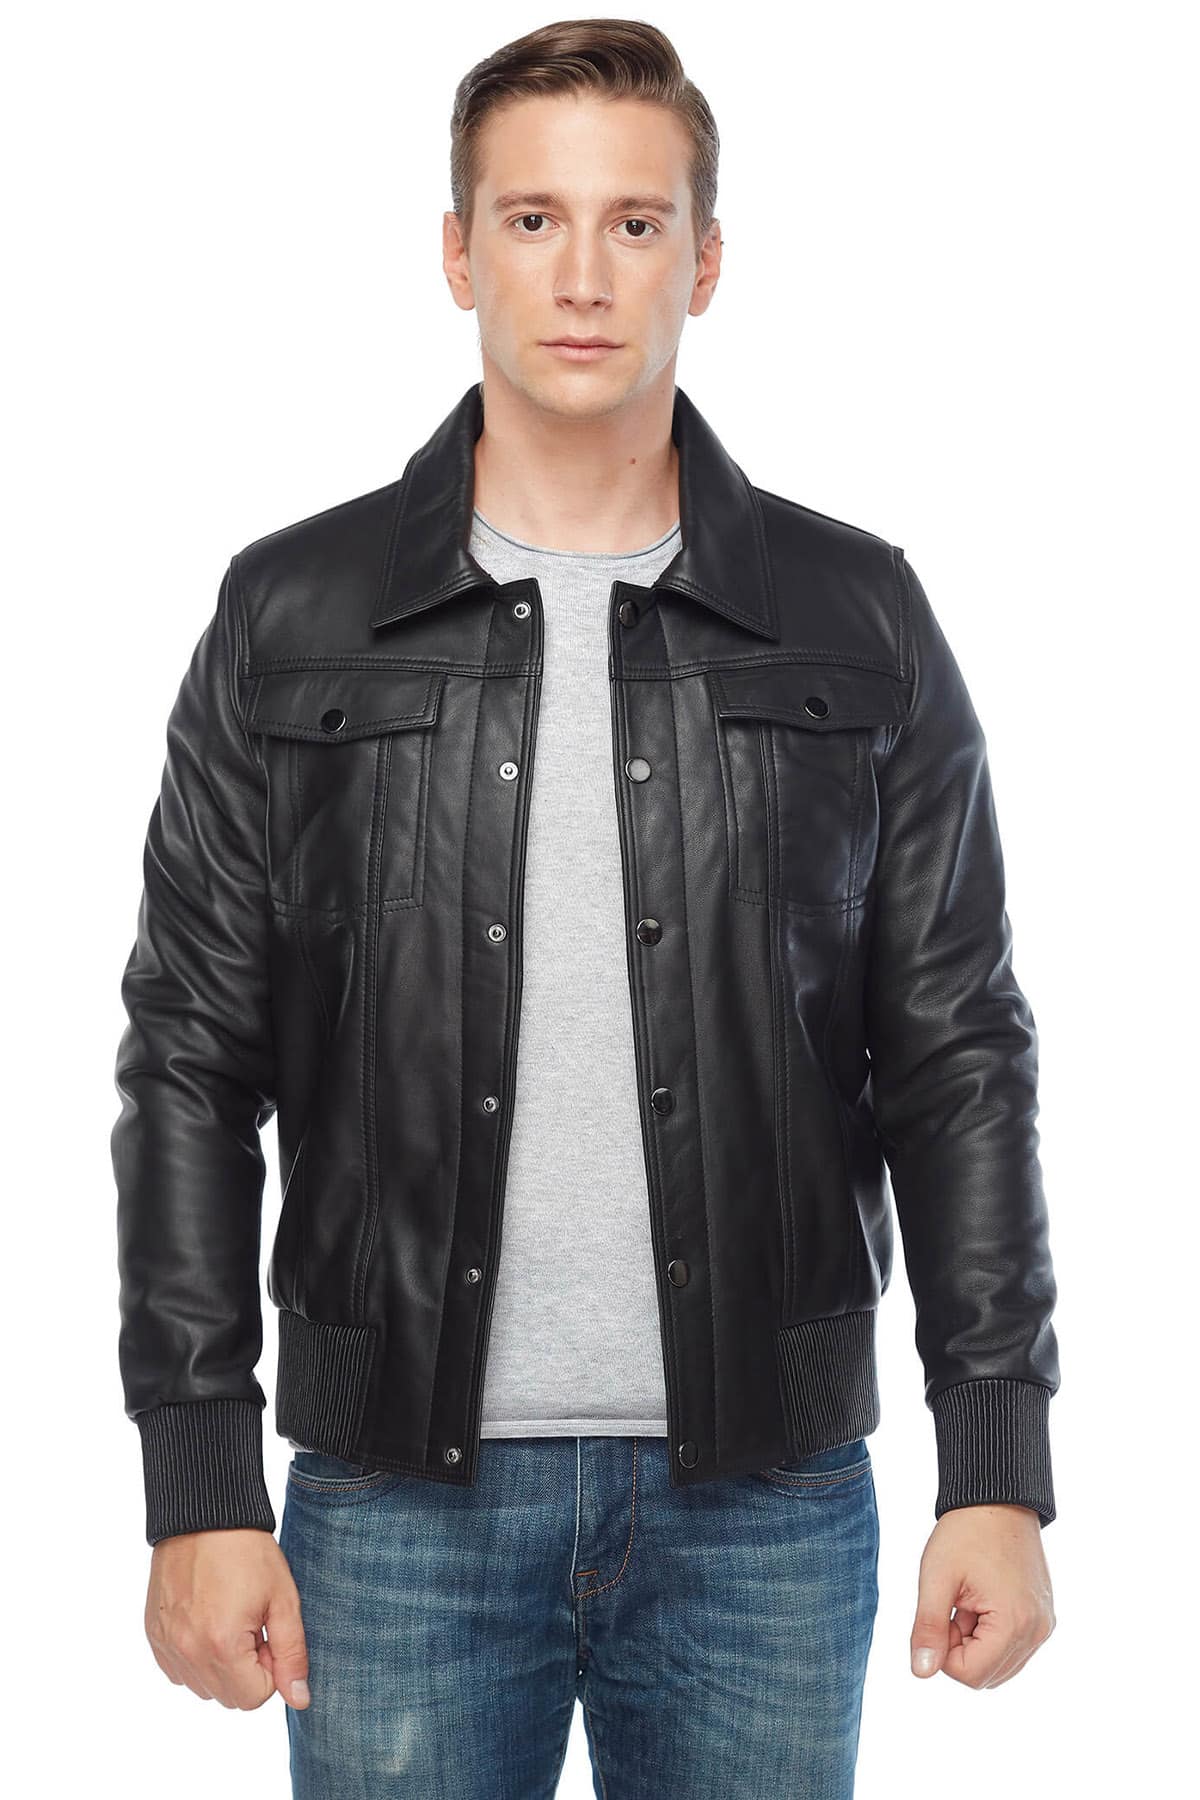 Will Chalker Men's 100 % Real Black Leather Bomber Jacket